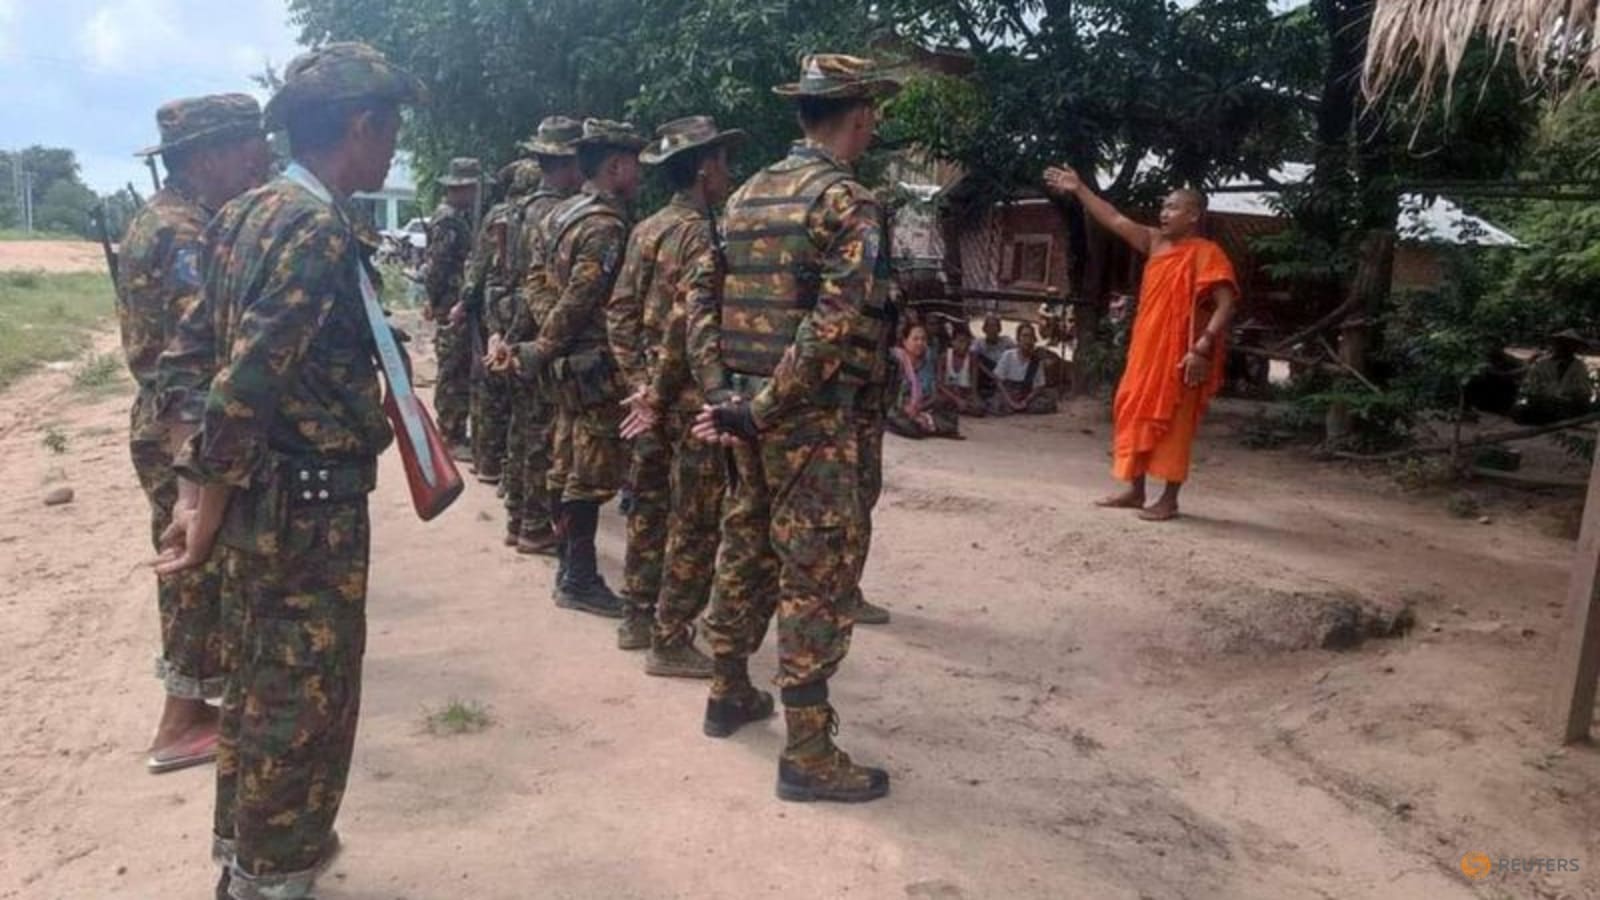 Monk militia: The Buddhist clergy backing Myanmar's junta